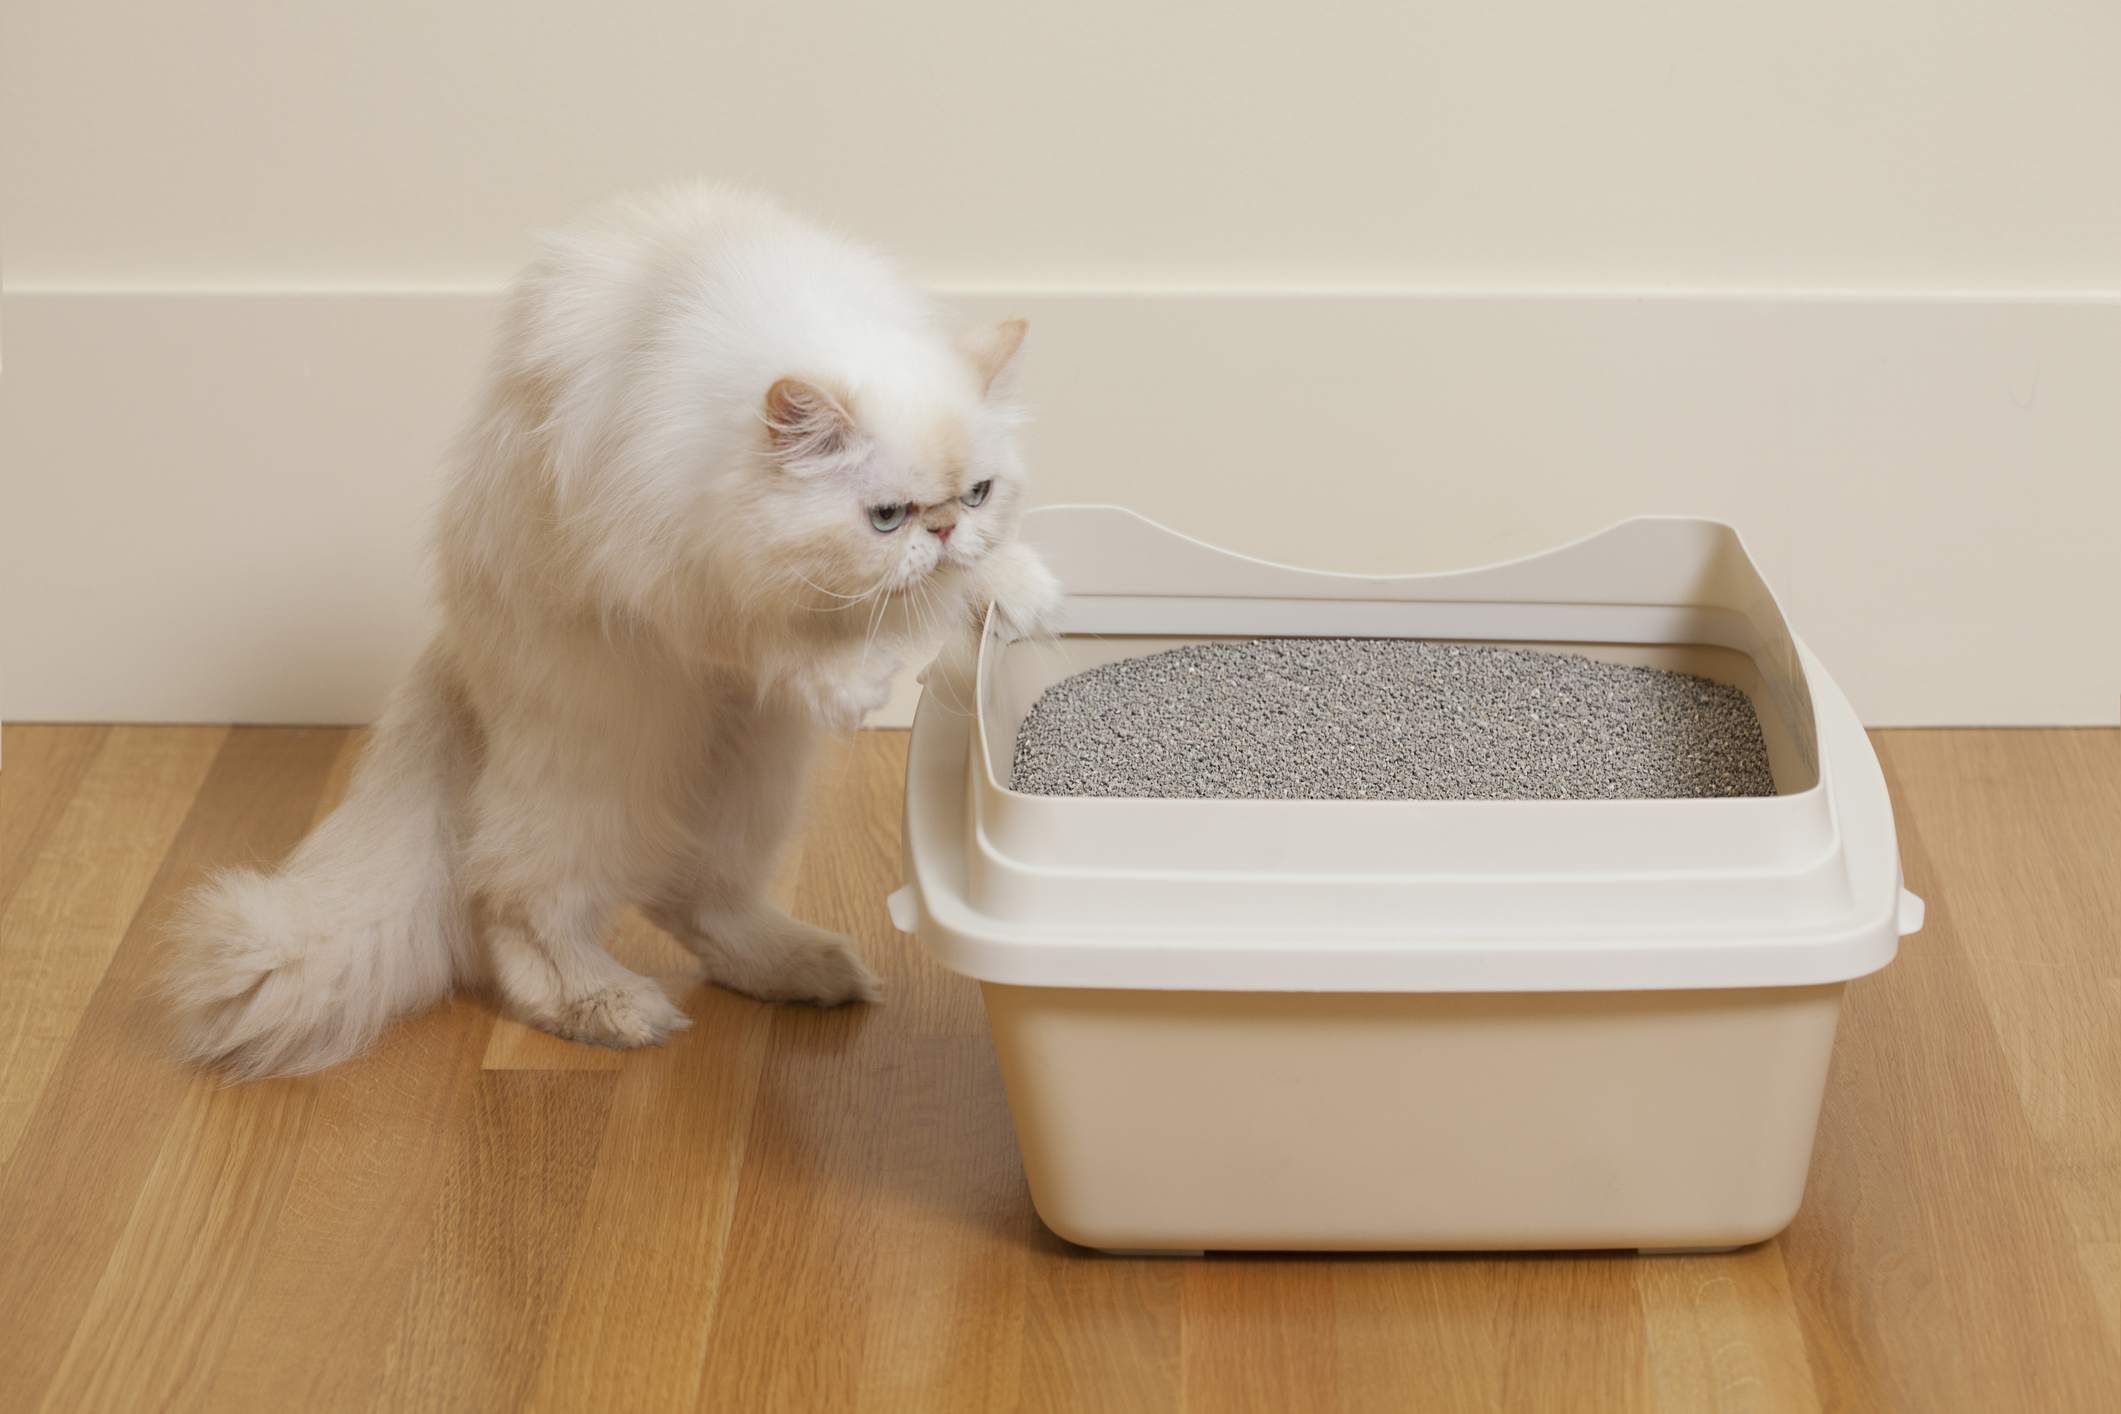 White Persian cat approaching a litter box.